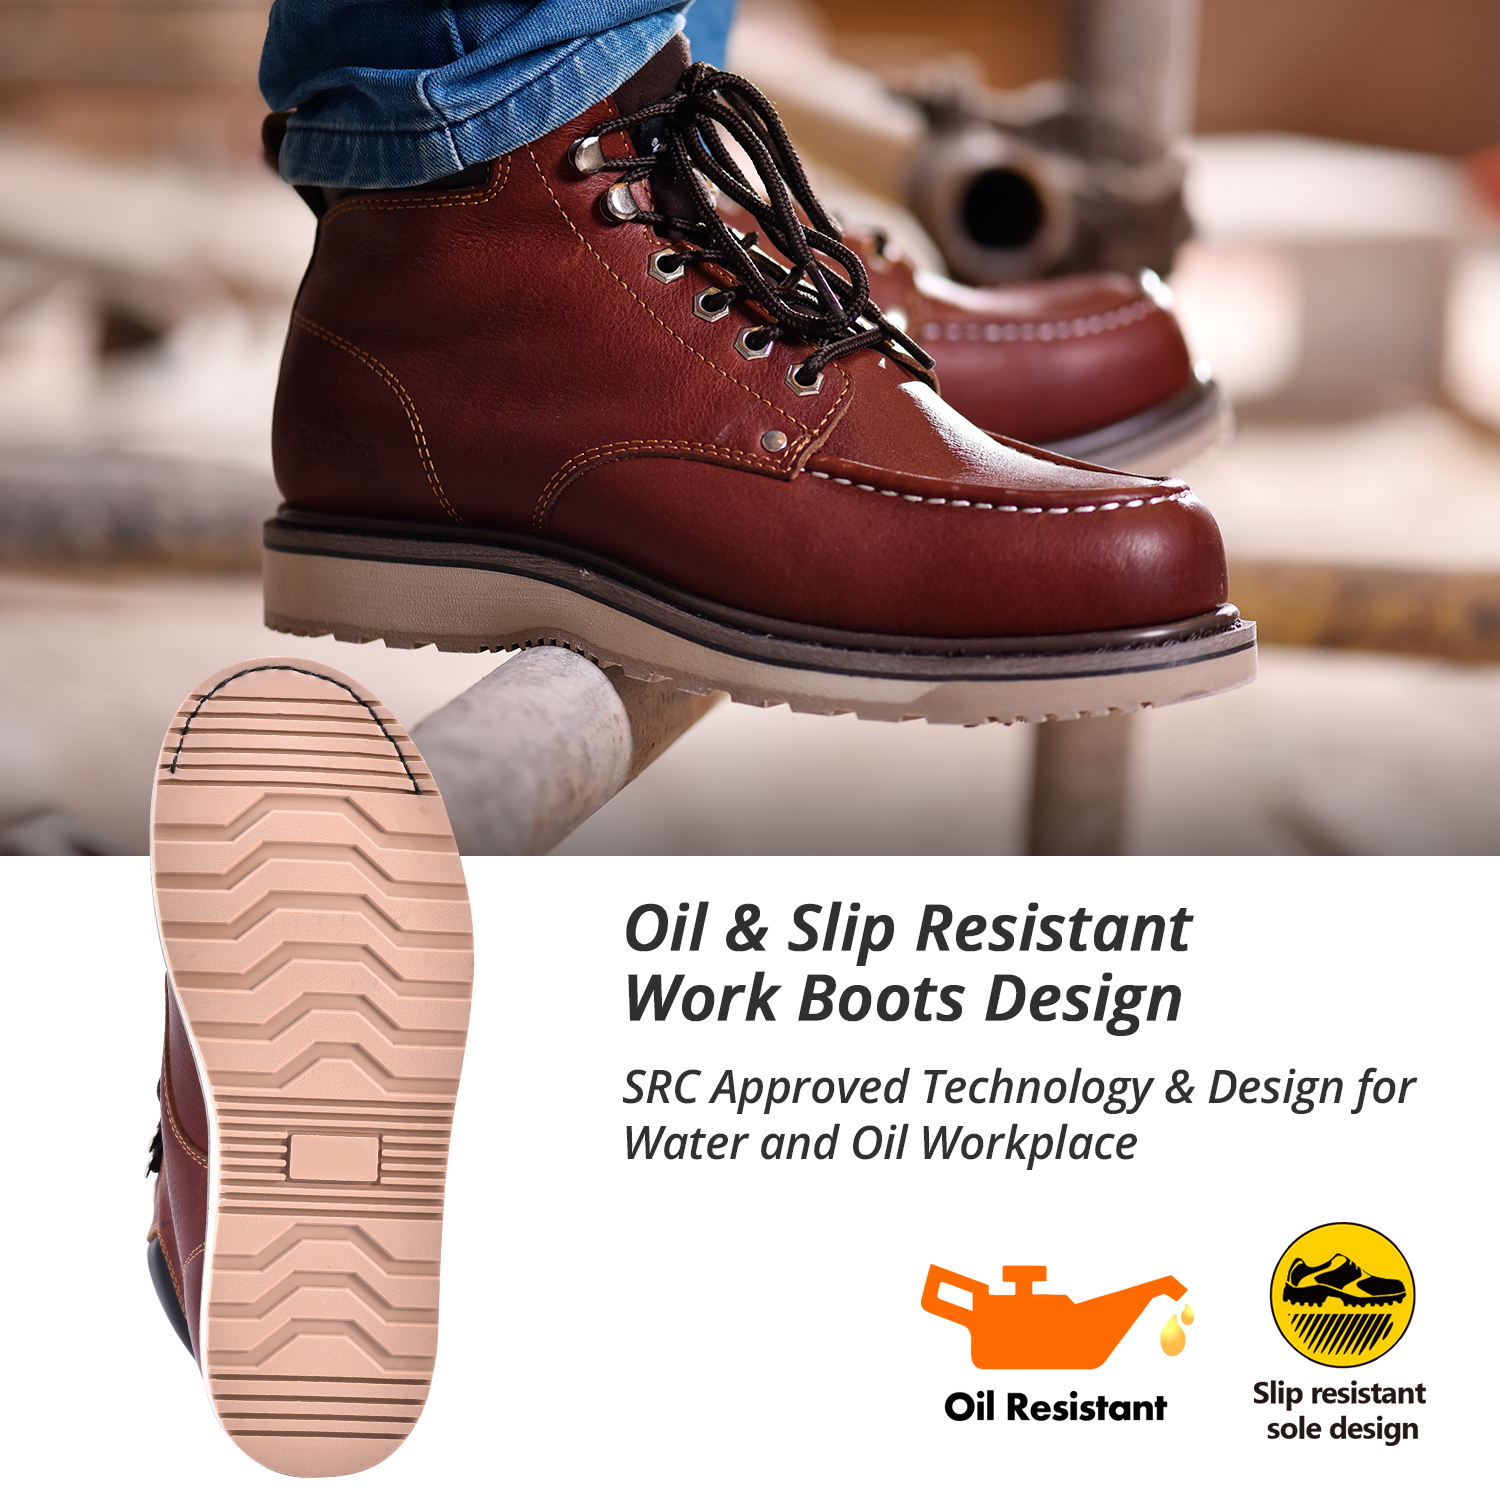 Safetoe Genuine Leather Soft Moc Toe Work Boots